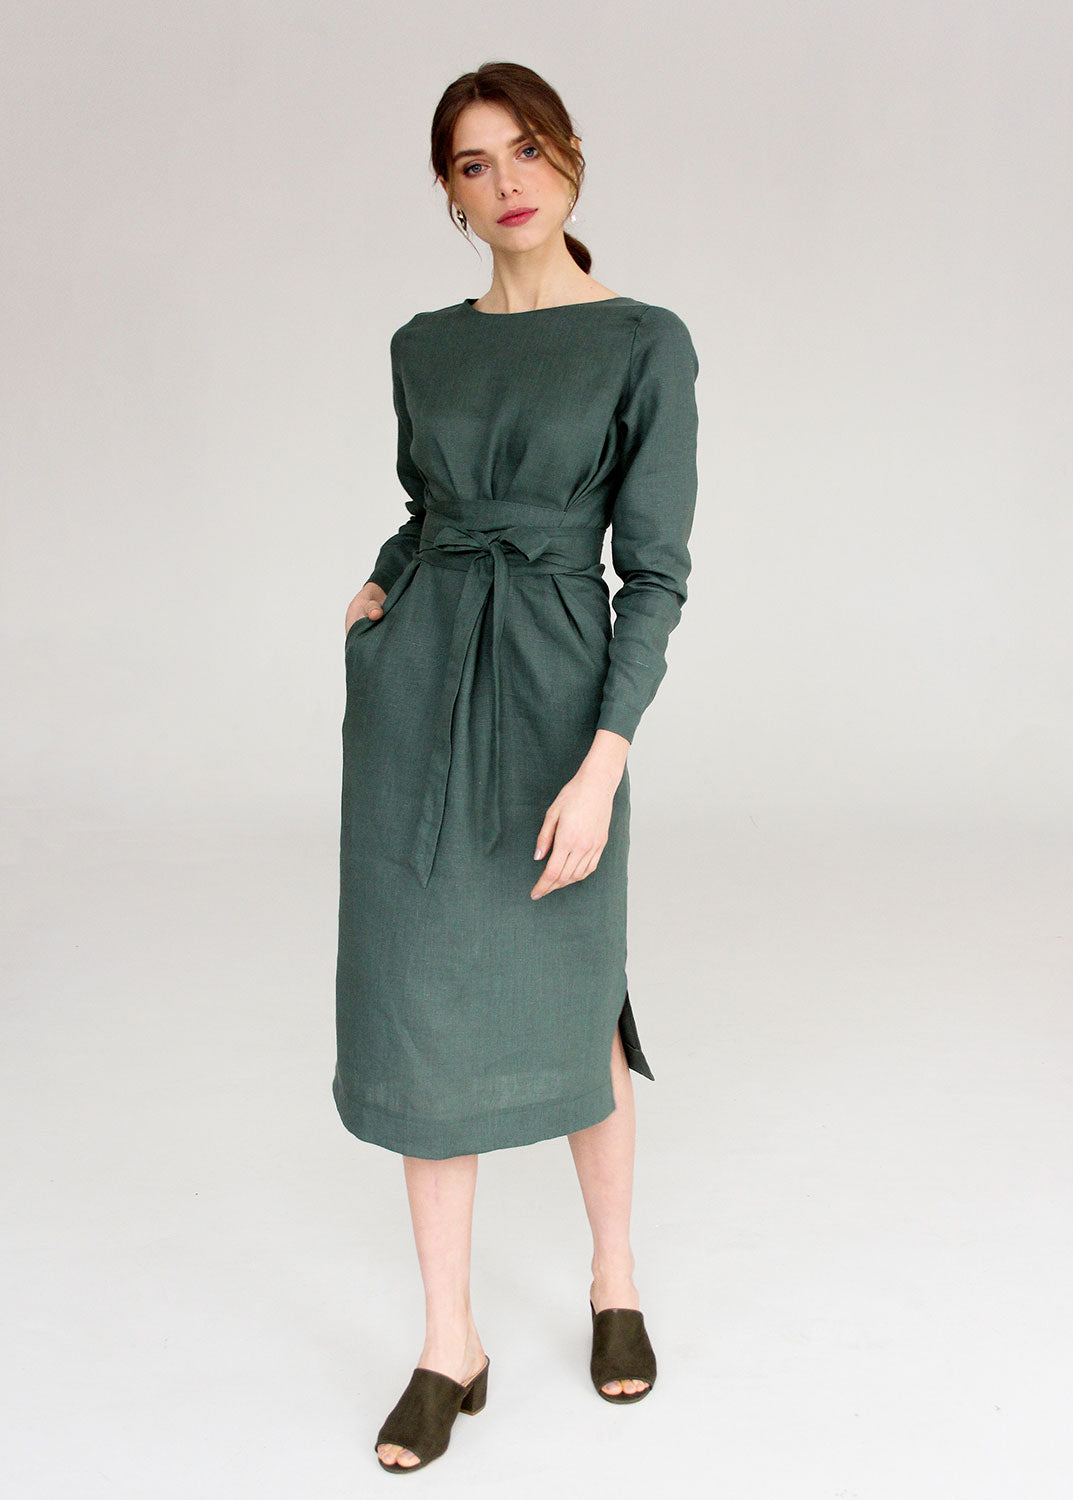 L size "Audrey" Sage Green Linen Dress